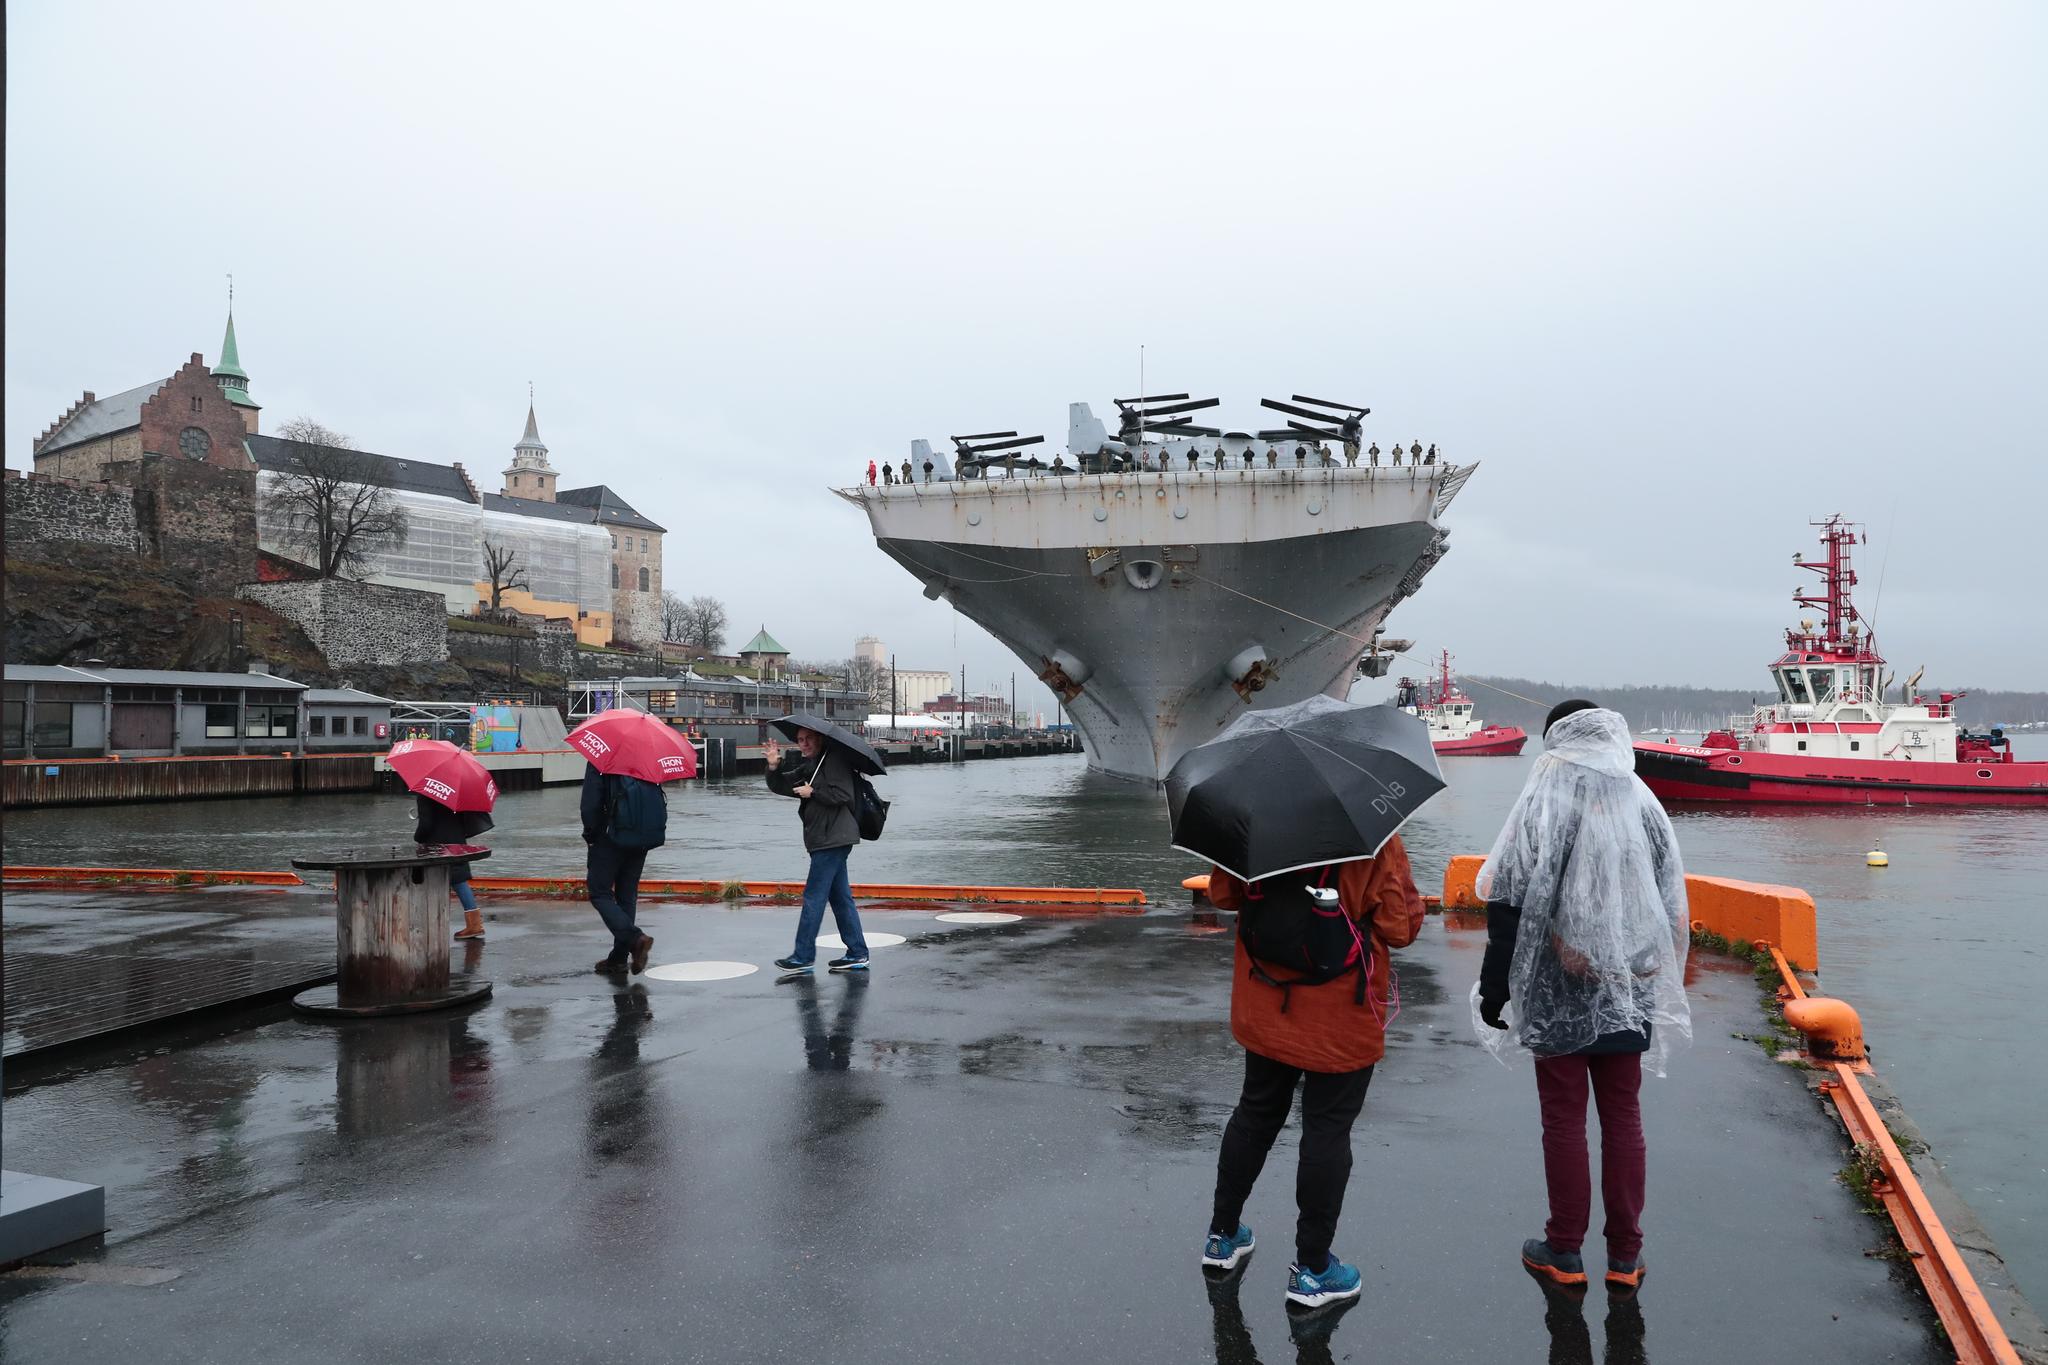 Selv om det regnet, var flere personer til stede ved cruiseterminalen da USS Iwo Jima ankom Oslo tirsdag.